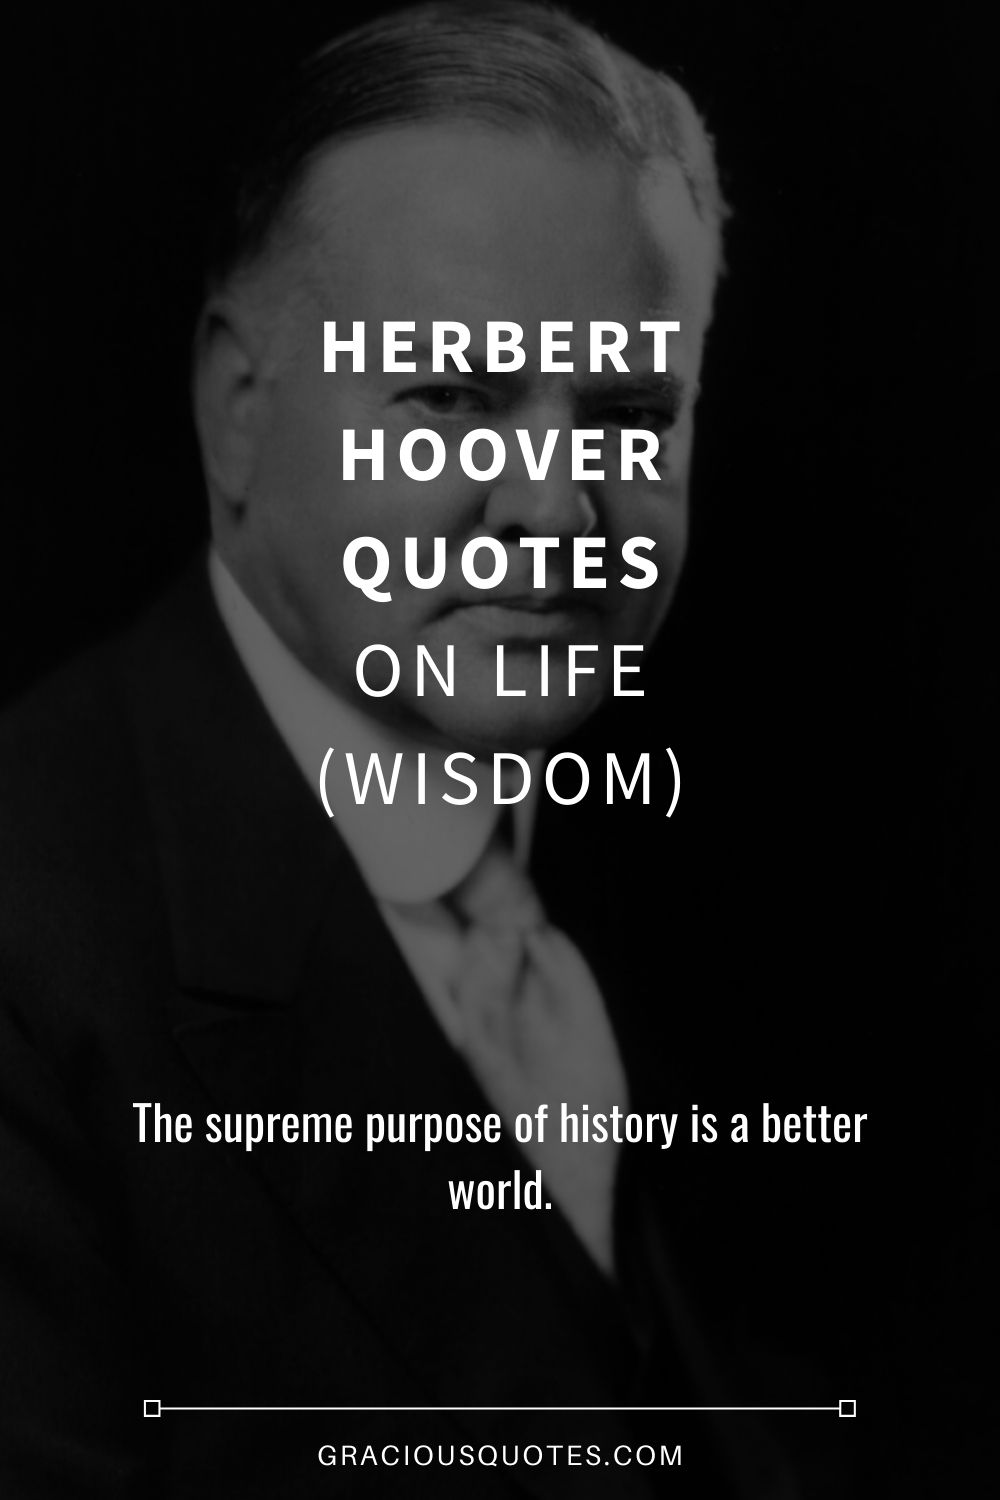 Hating on Herbert Hoover